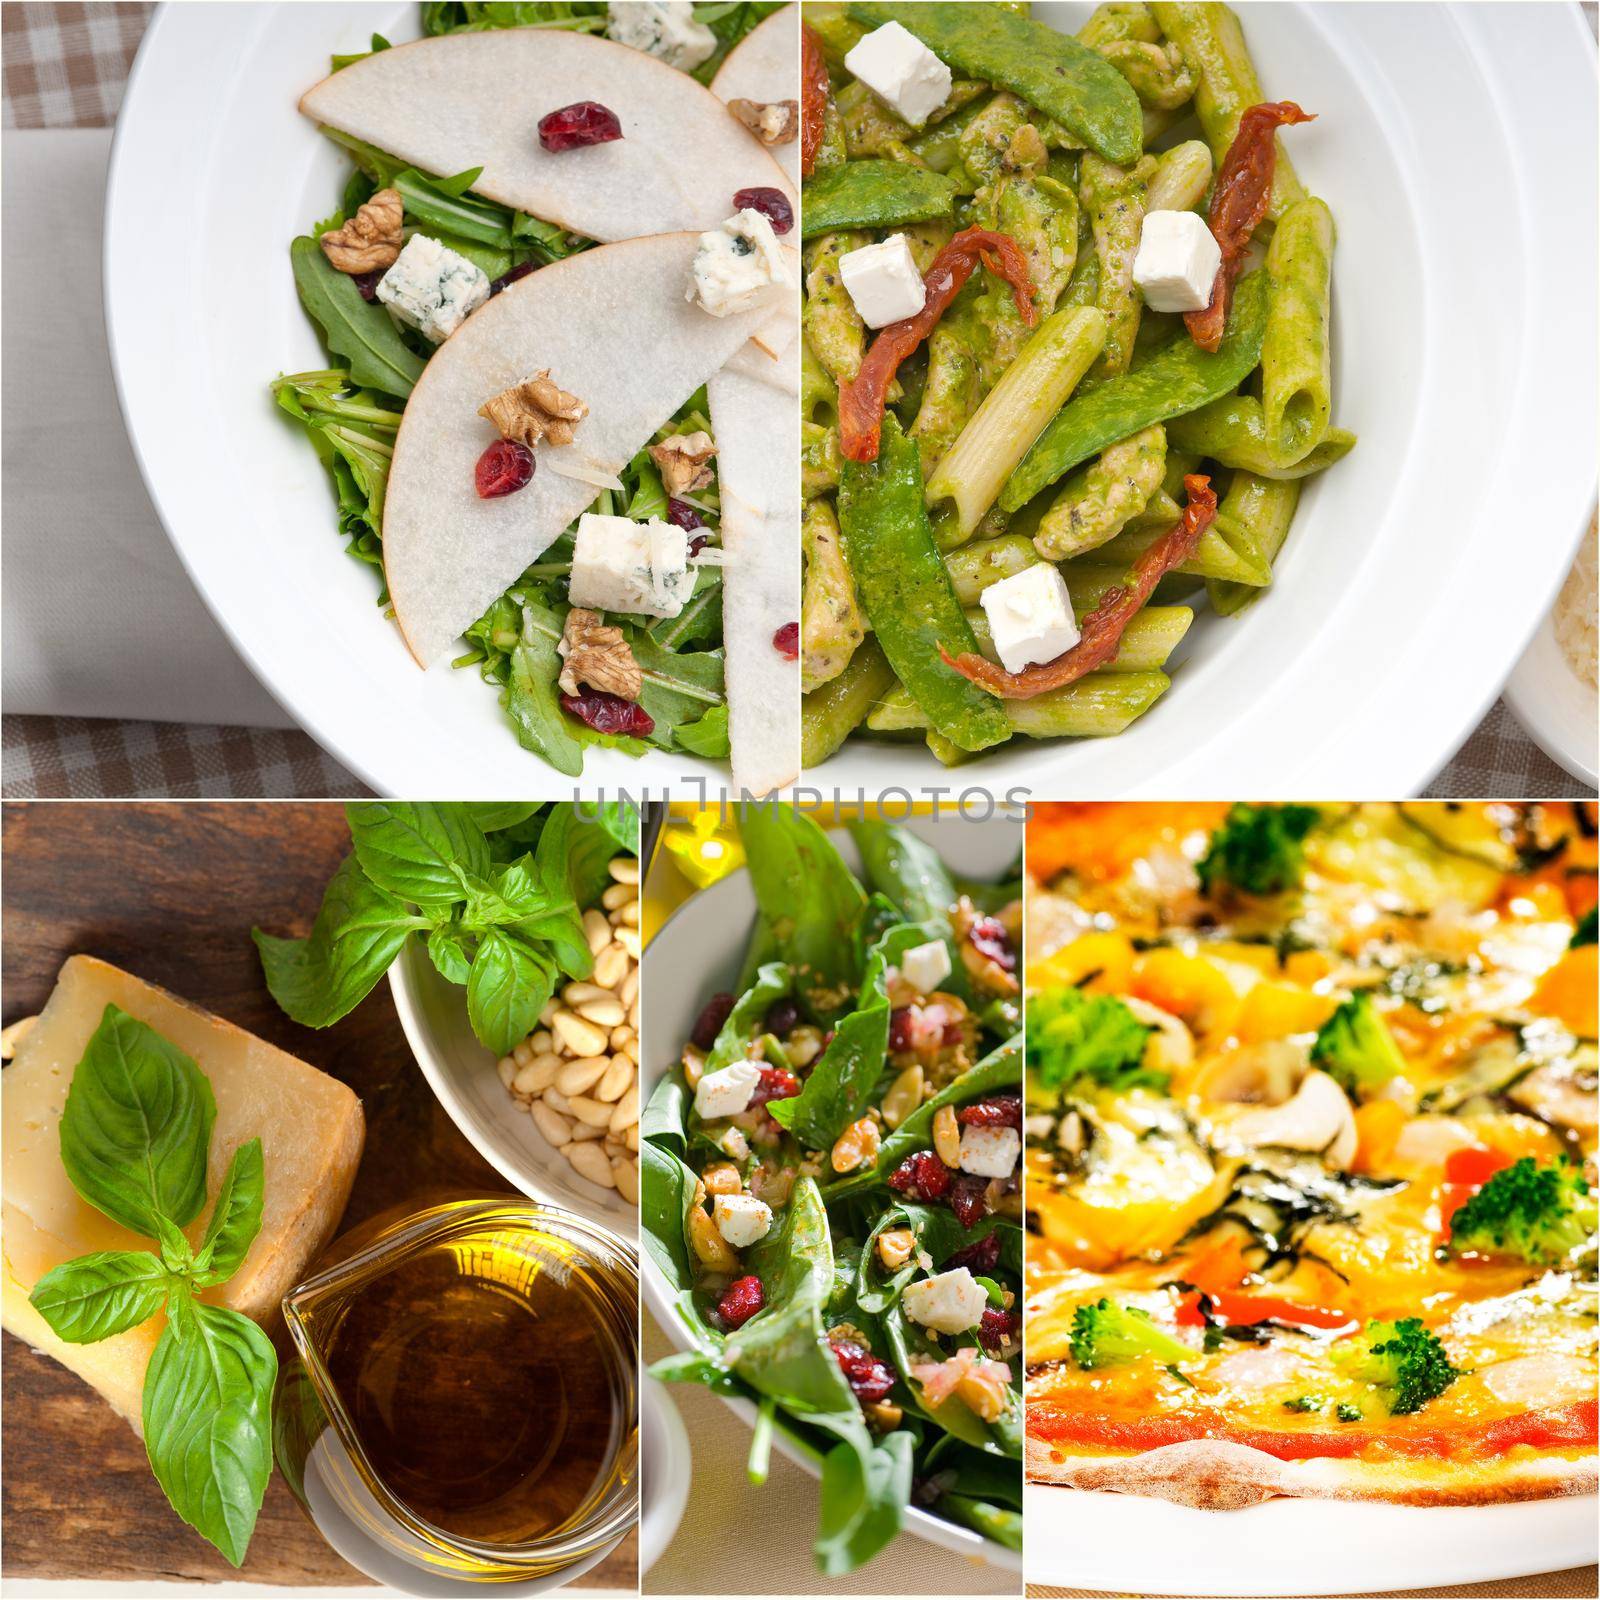 healthy and tasty Italian food collage by keko64